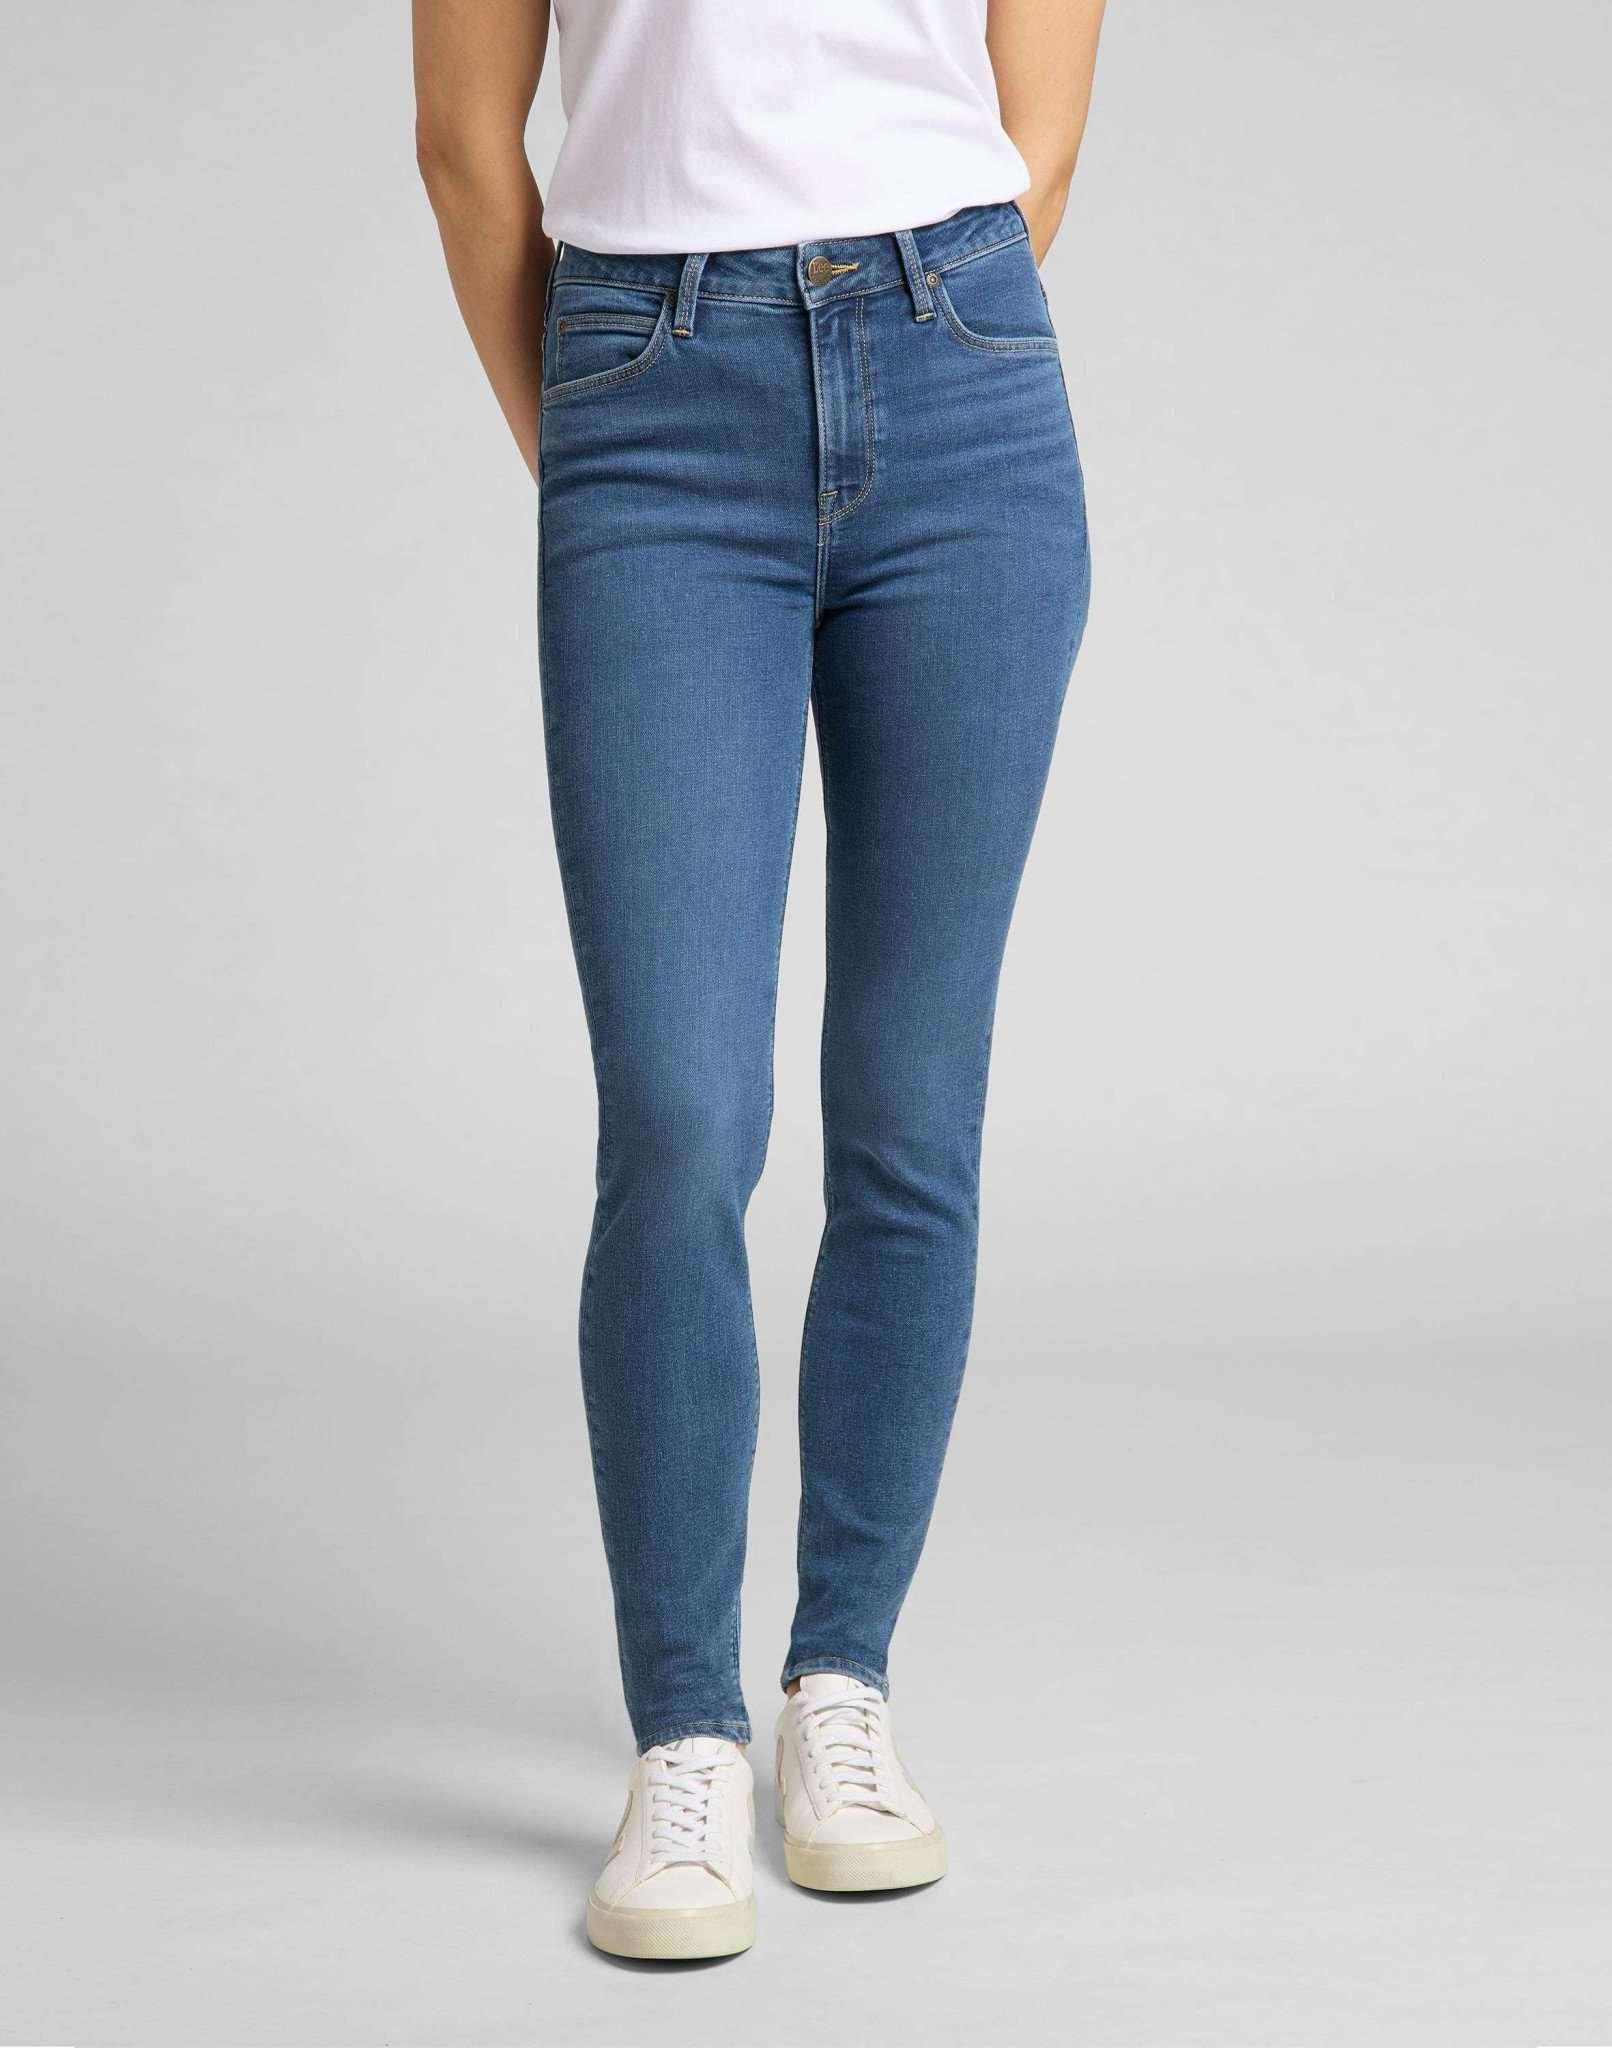 Jeans Skinny Fit Scarlett High Damen Blau Denim L33/W30 von Lee